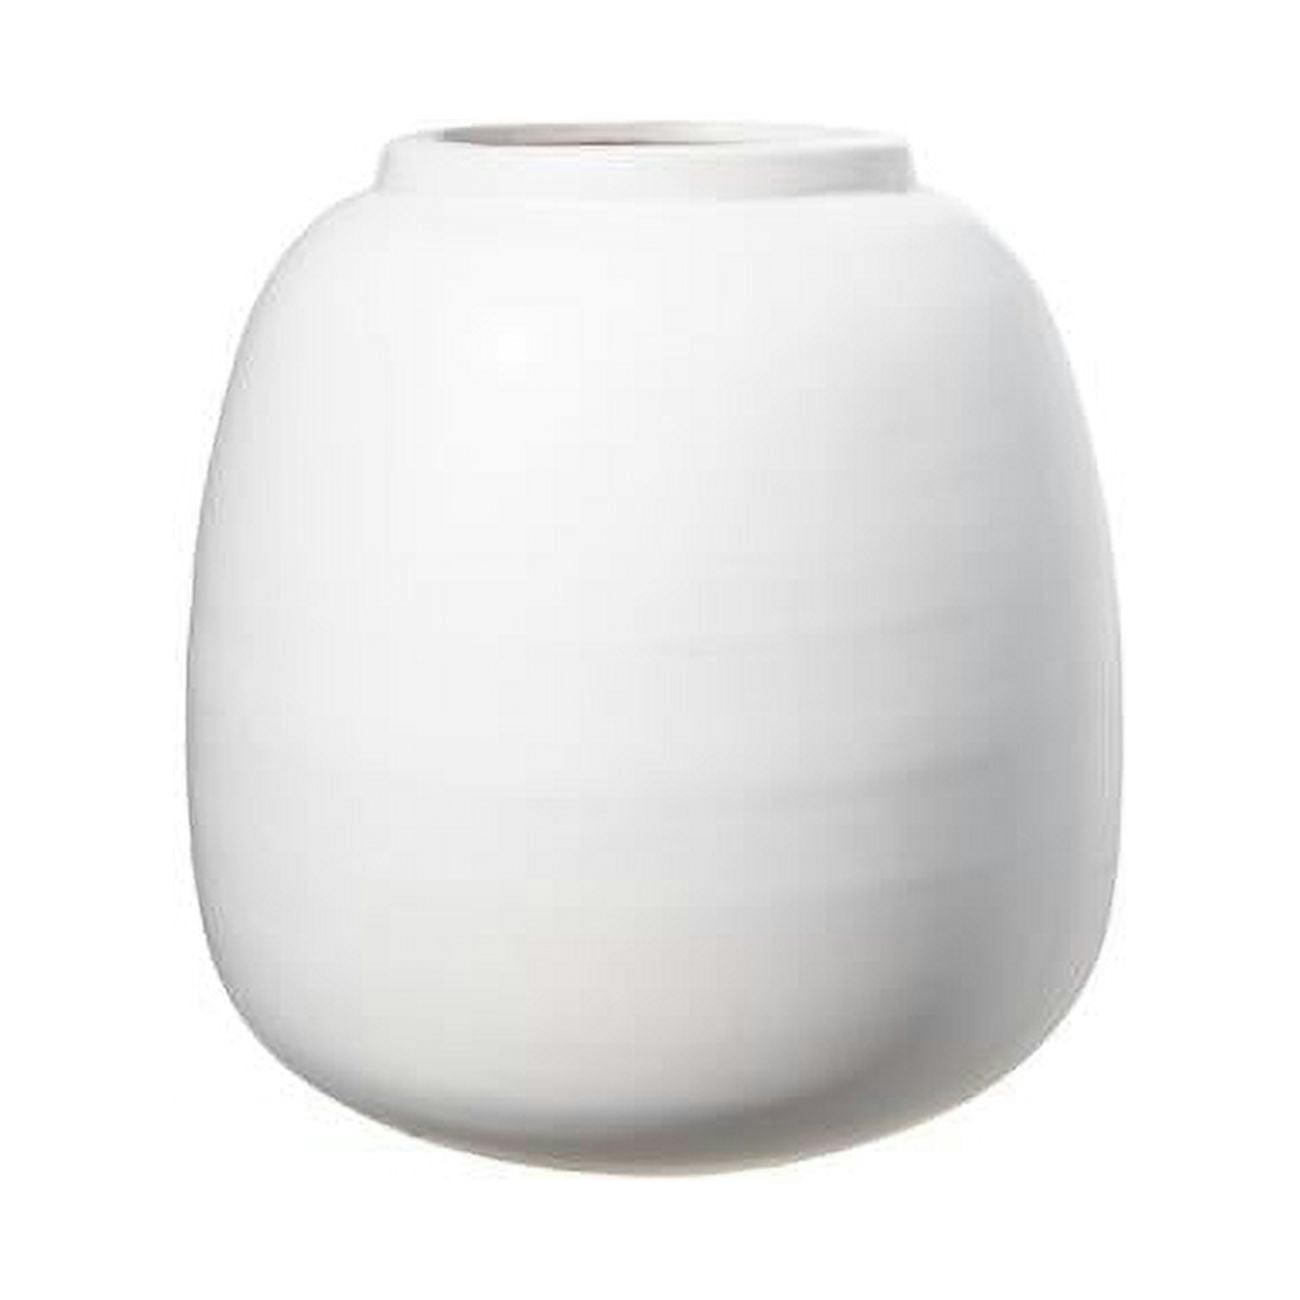 Matte White Ceramic Round Table Vase with Narrow Mouth